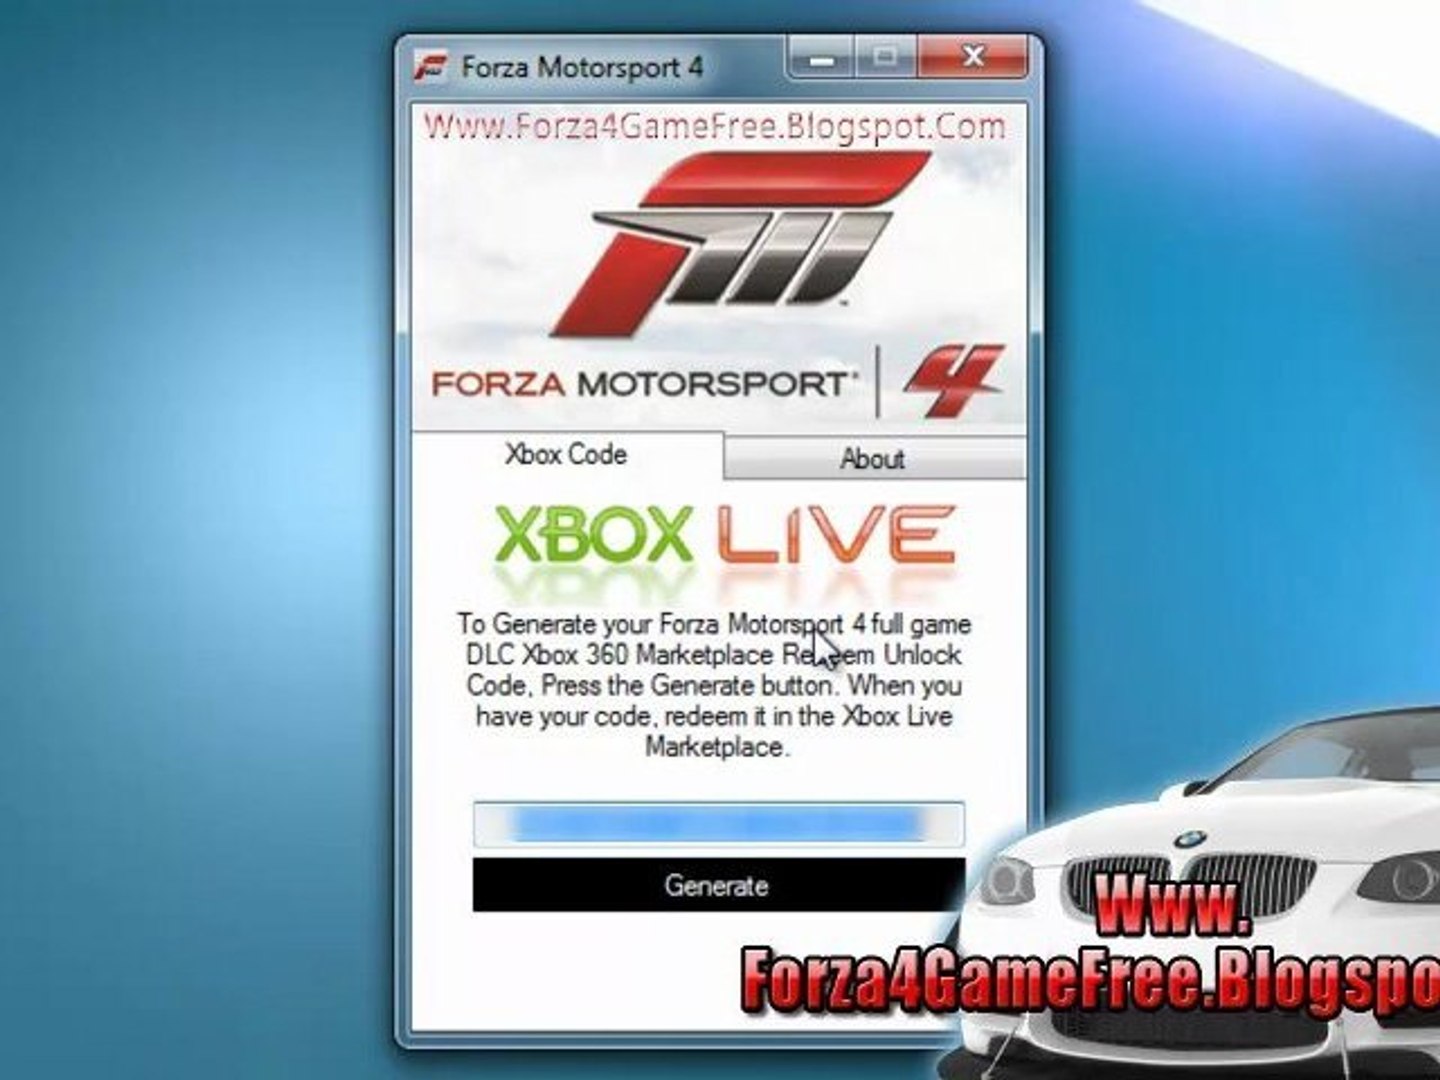 How to Downlaod Forza Motorsport 4 Free on Xbox 360 - video Dailymotion